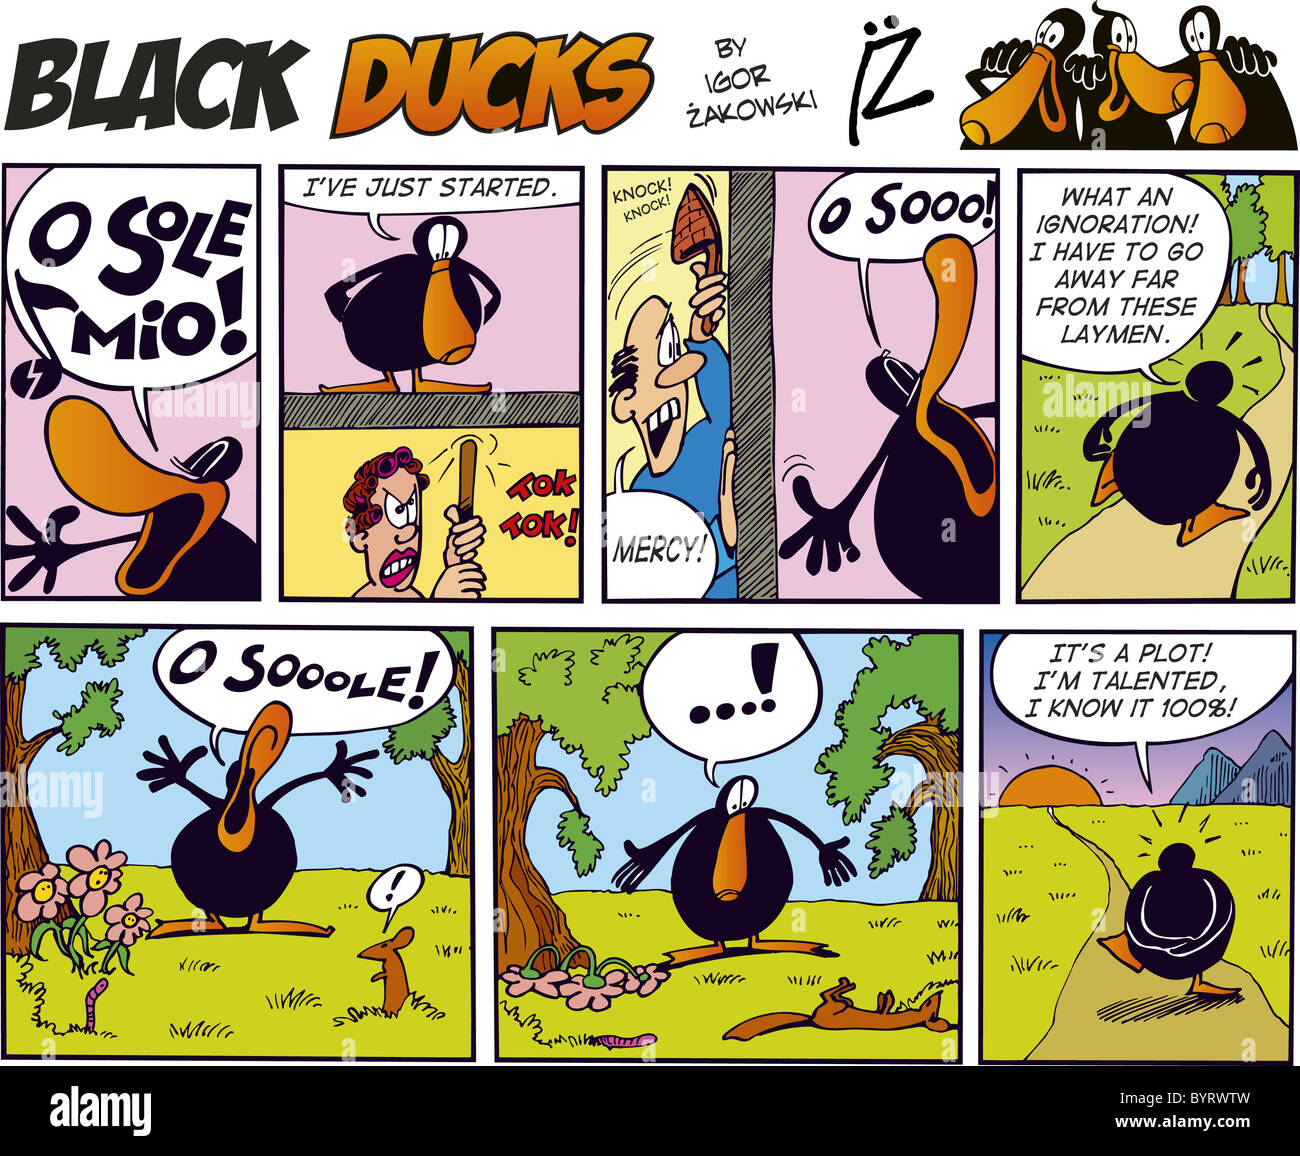 Black Ducks Comic Strip episode 12 Stock Photo